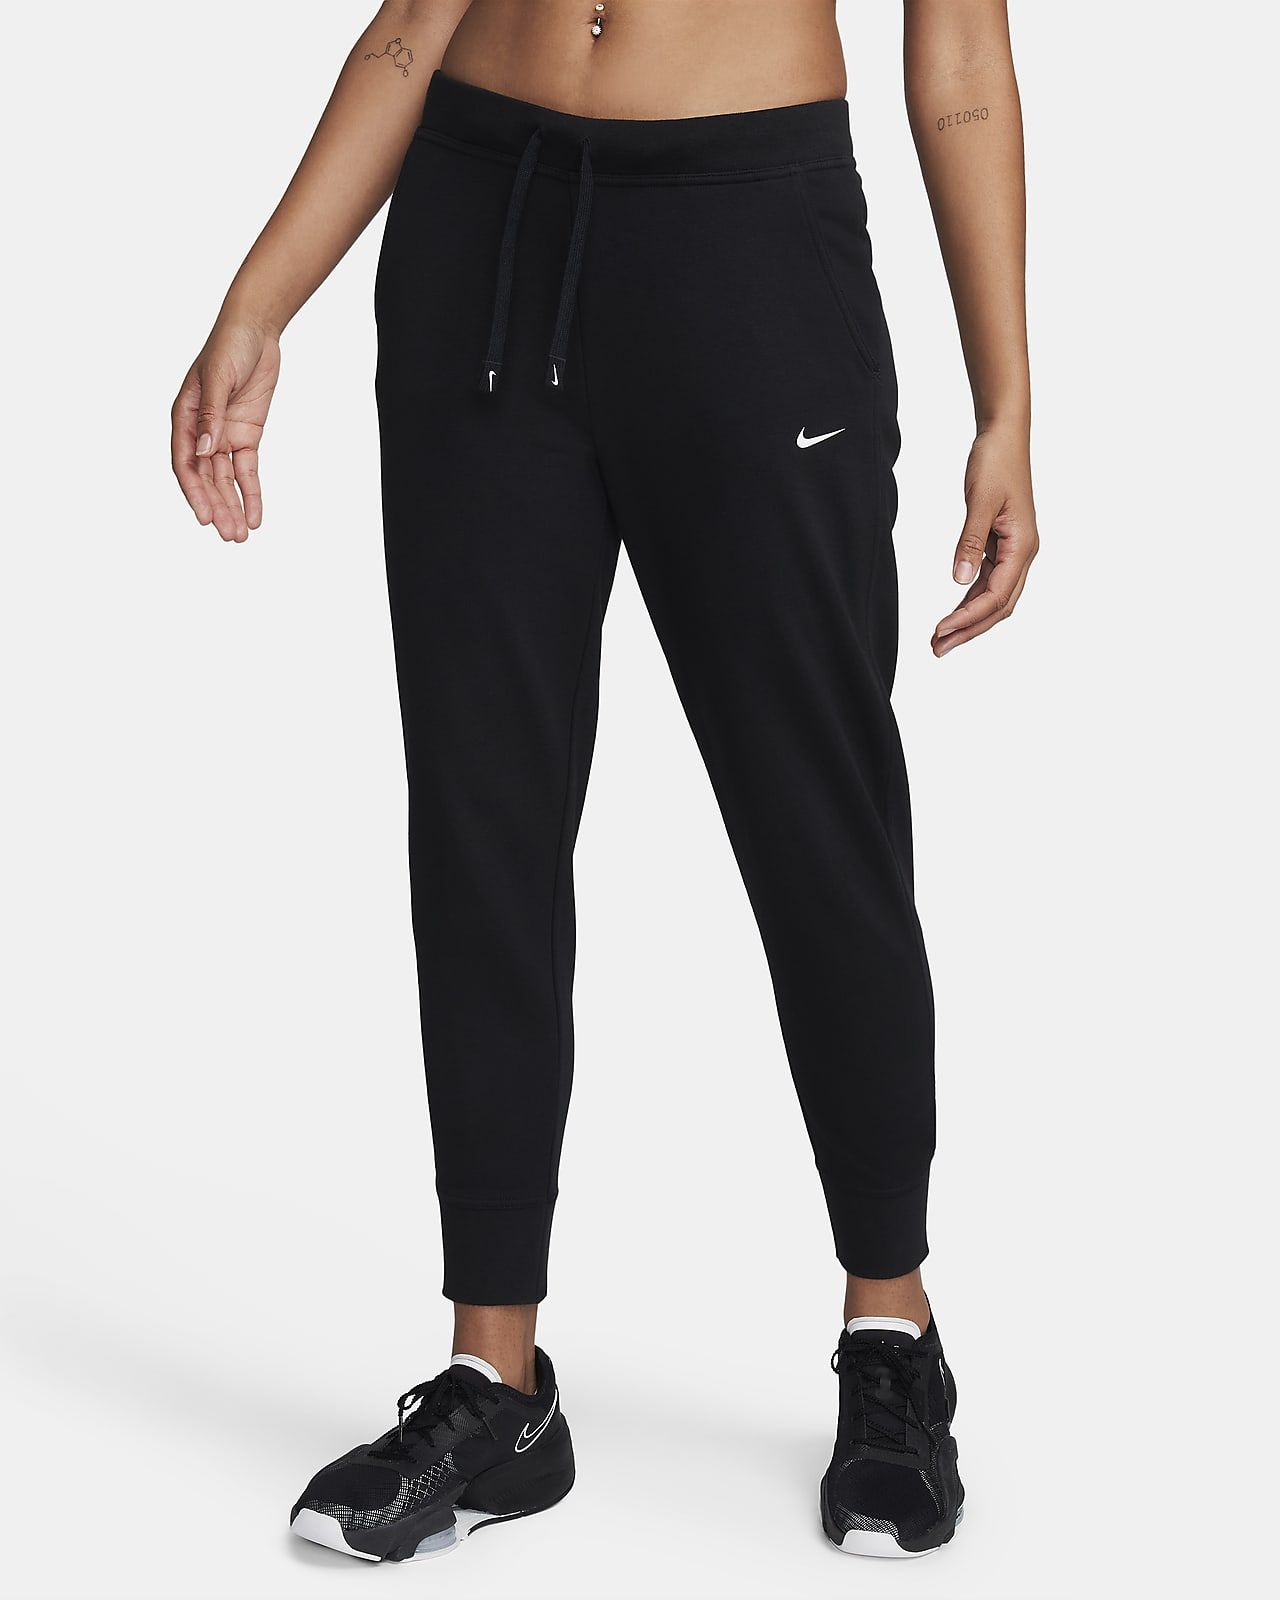 Women's Training Pants | Nike (US)